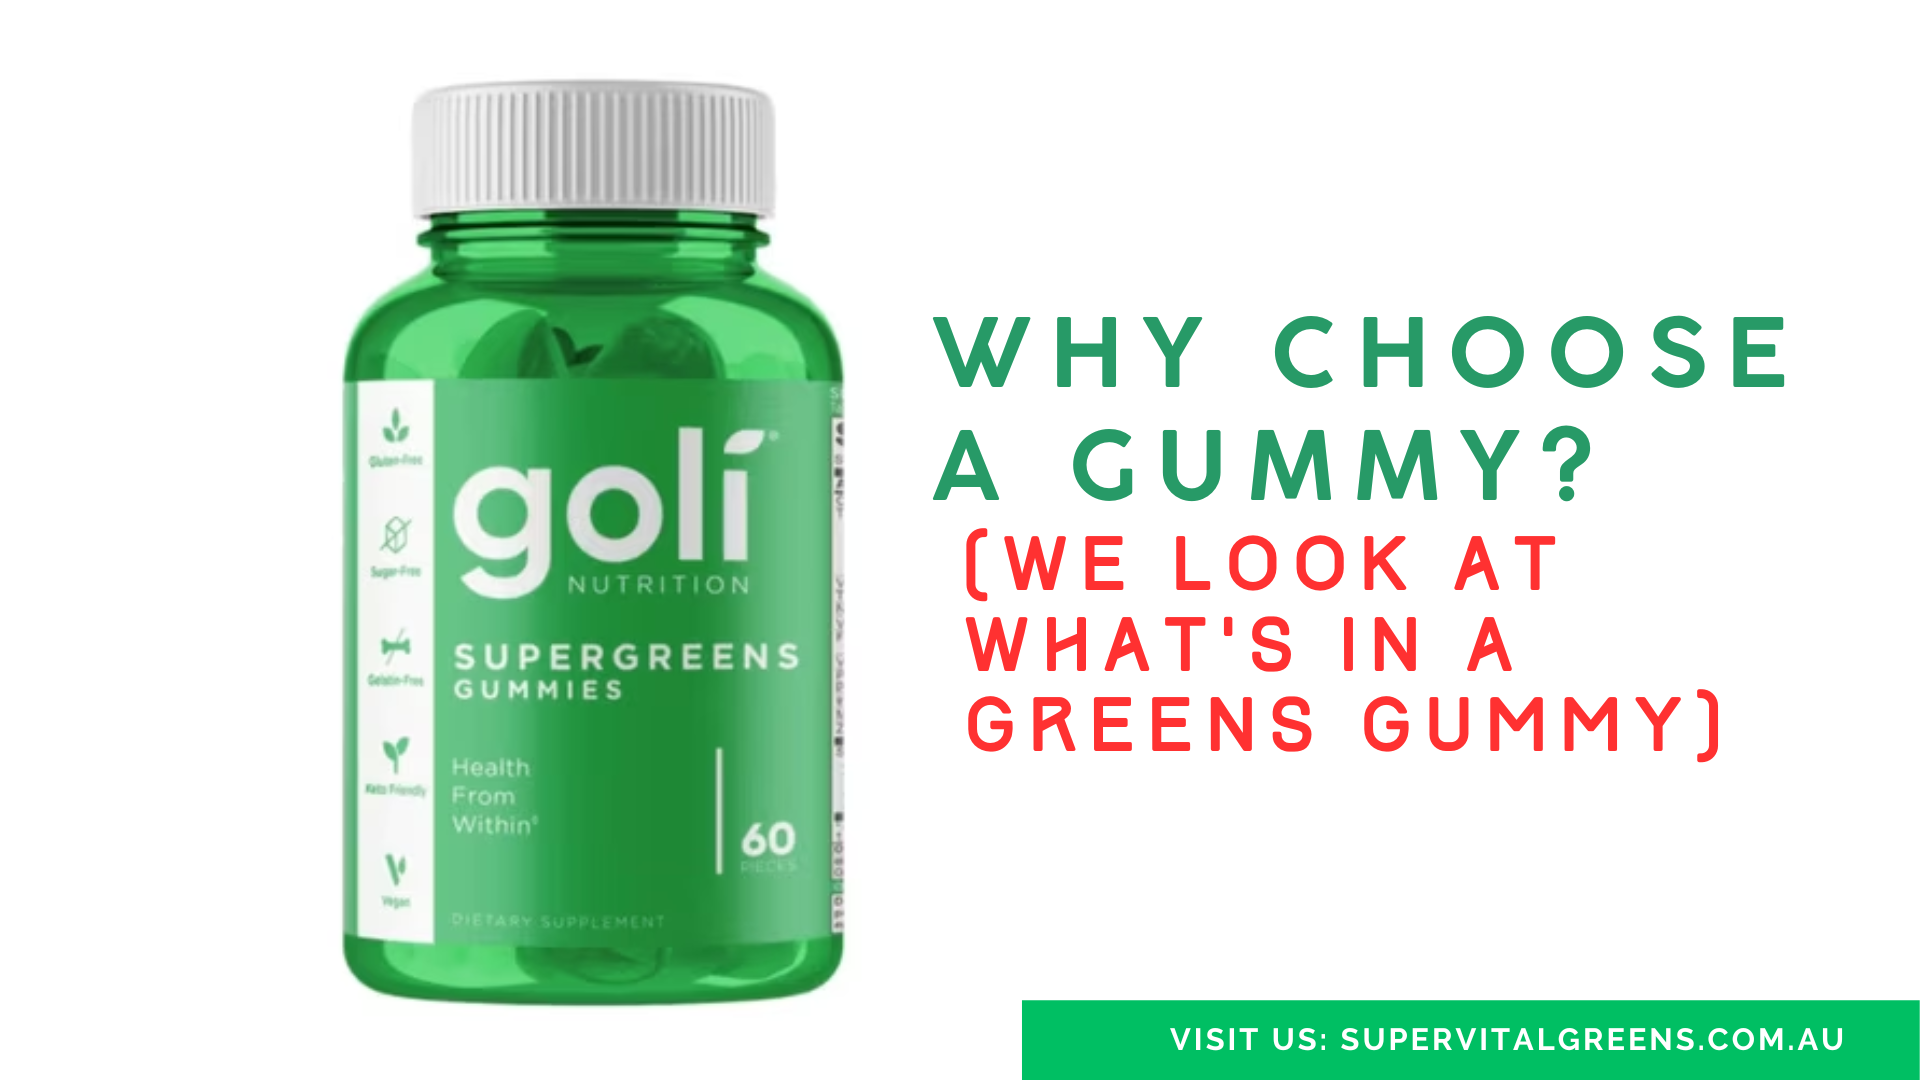 Goli Supergreens Gummies Review